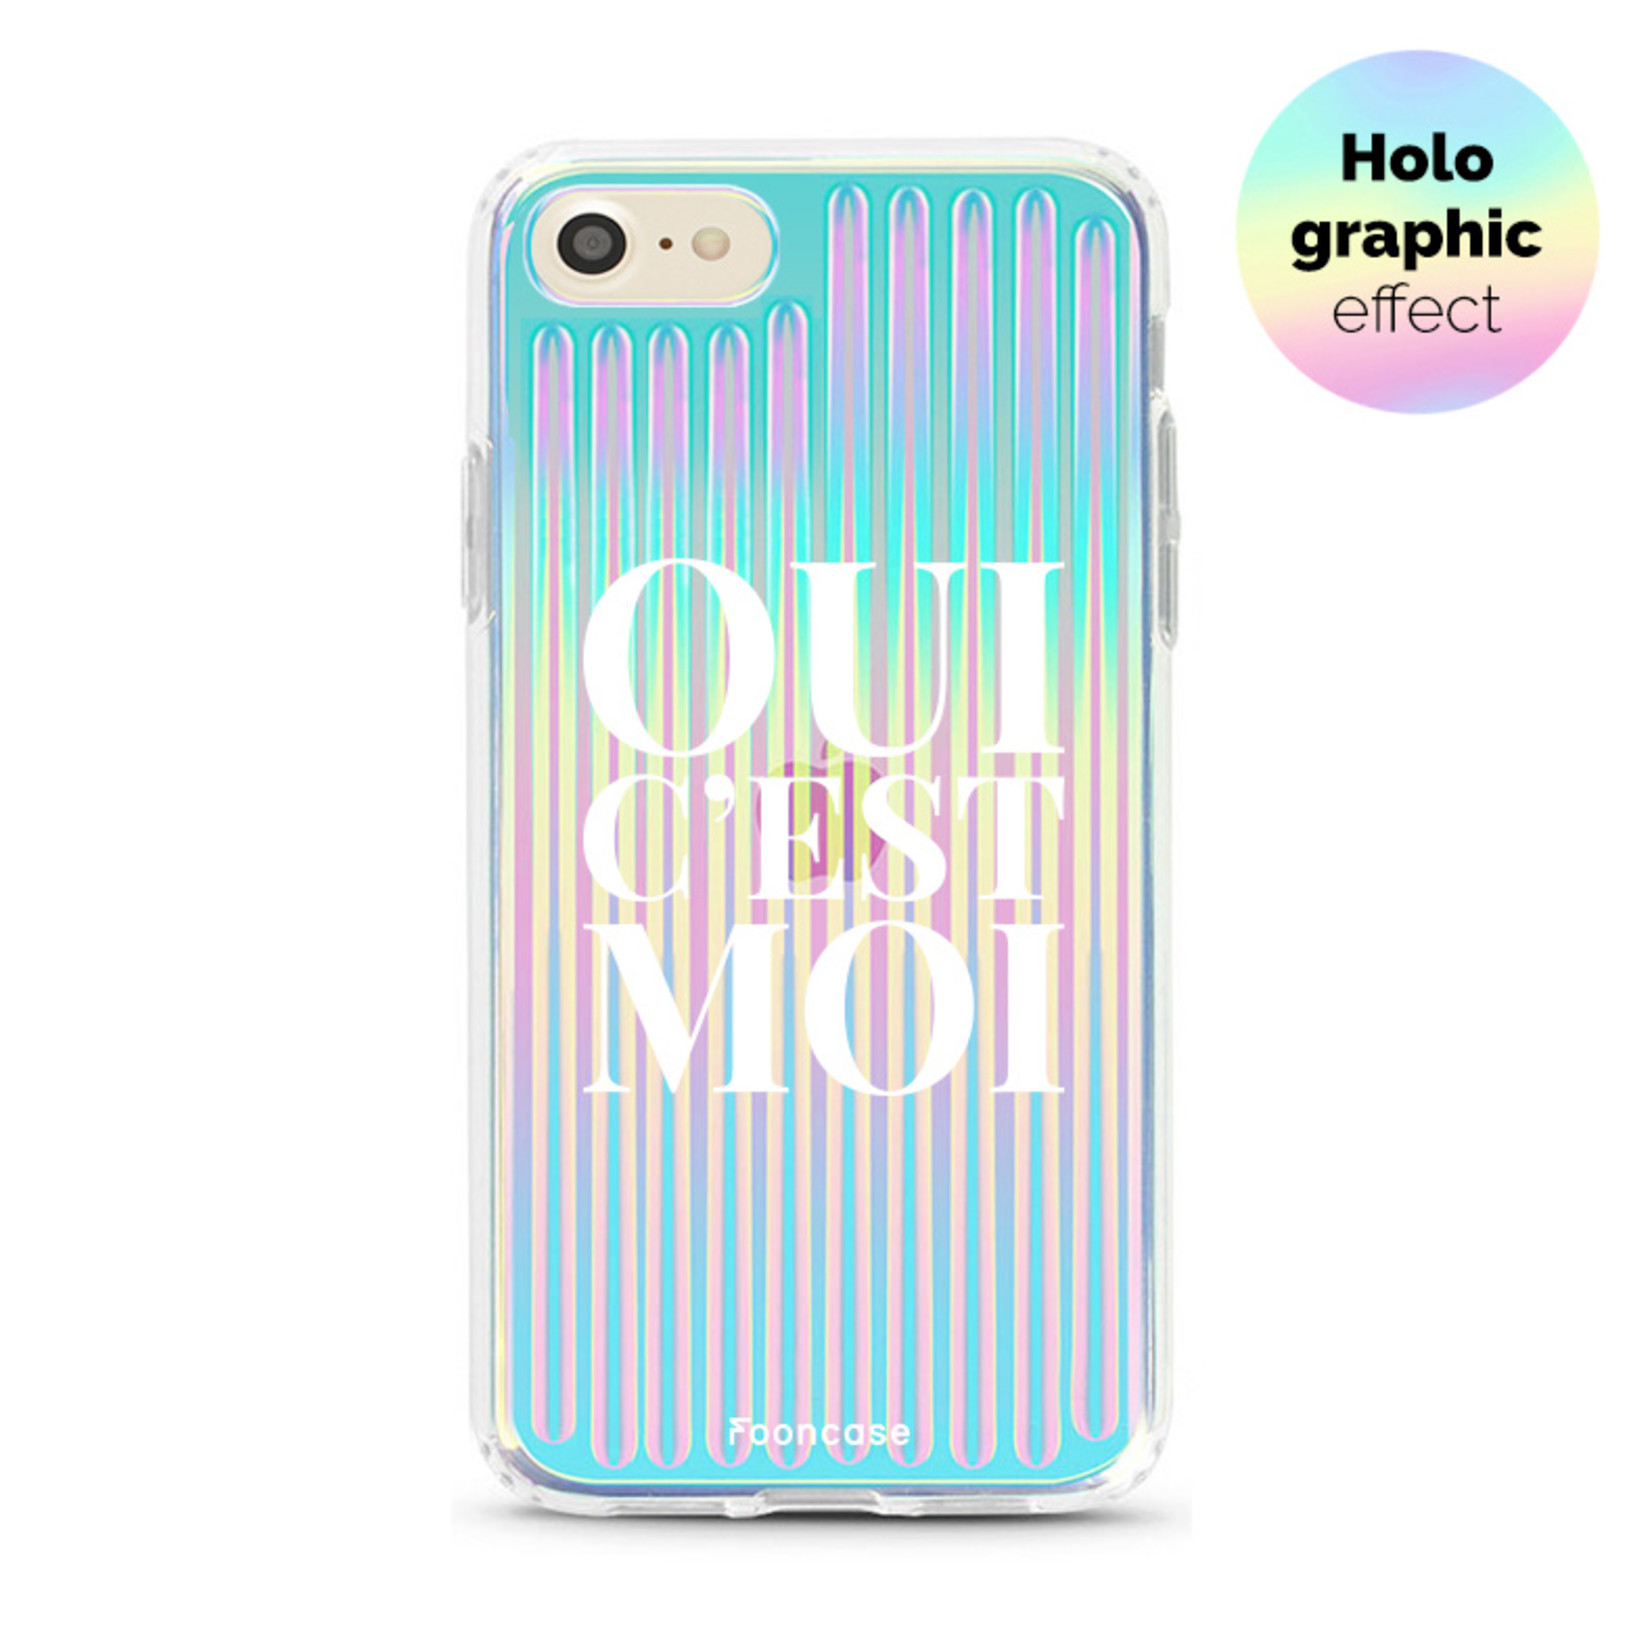 FOONCASE iPhone 7 hoesje - TPU Hard Case - Holografisch effect - Back Cover - Oui C'est Moi (Holographic)